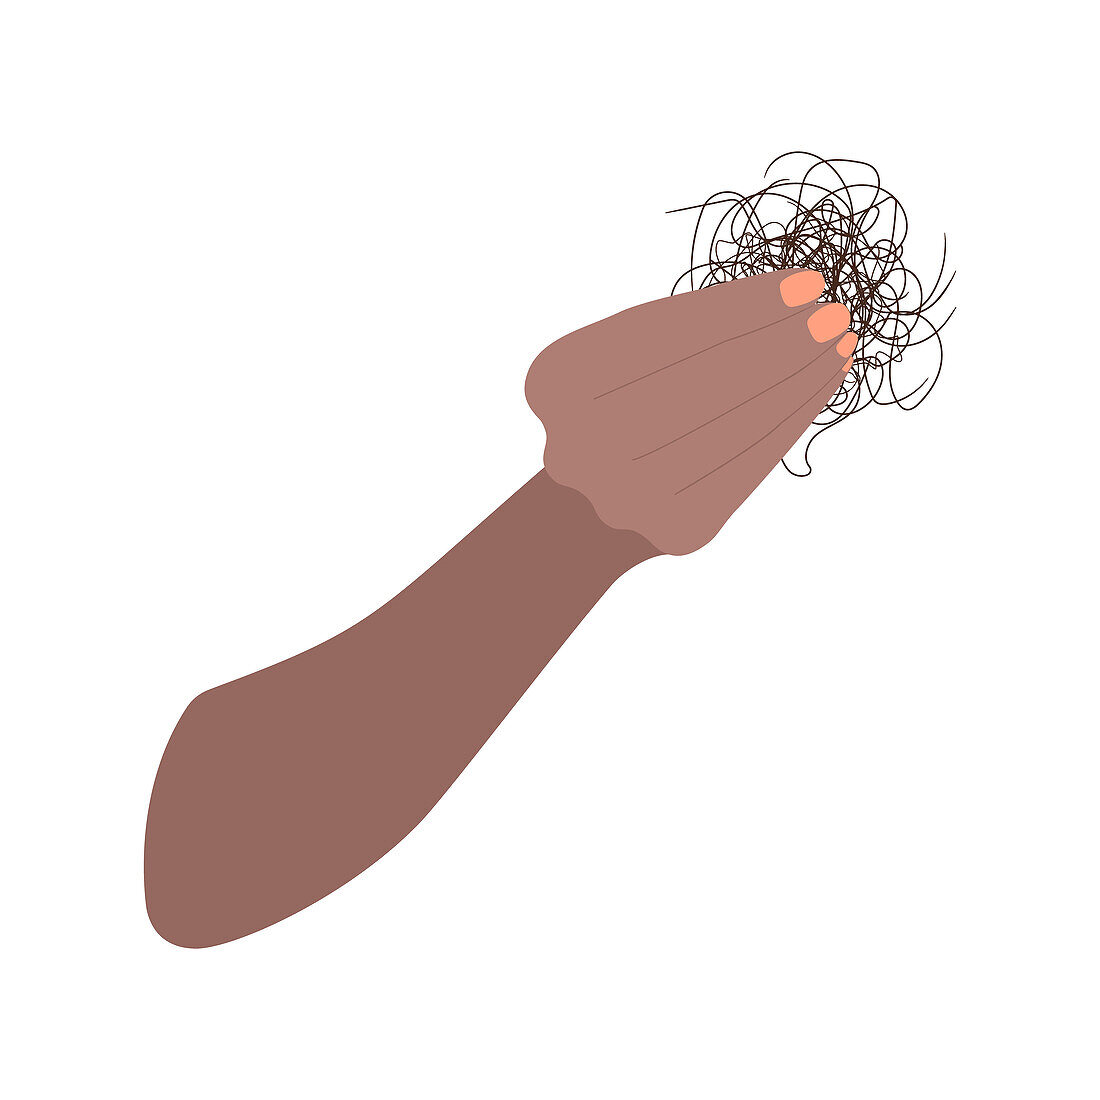 Hair loss, conceptual illustration